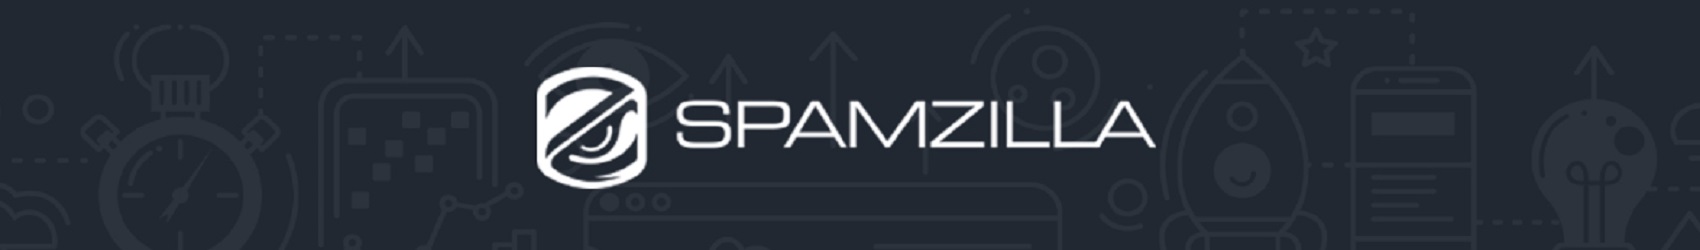 SpamZilla